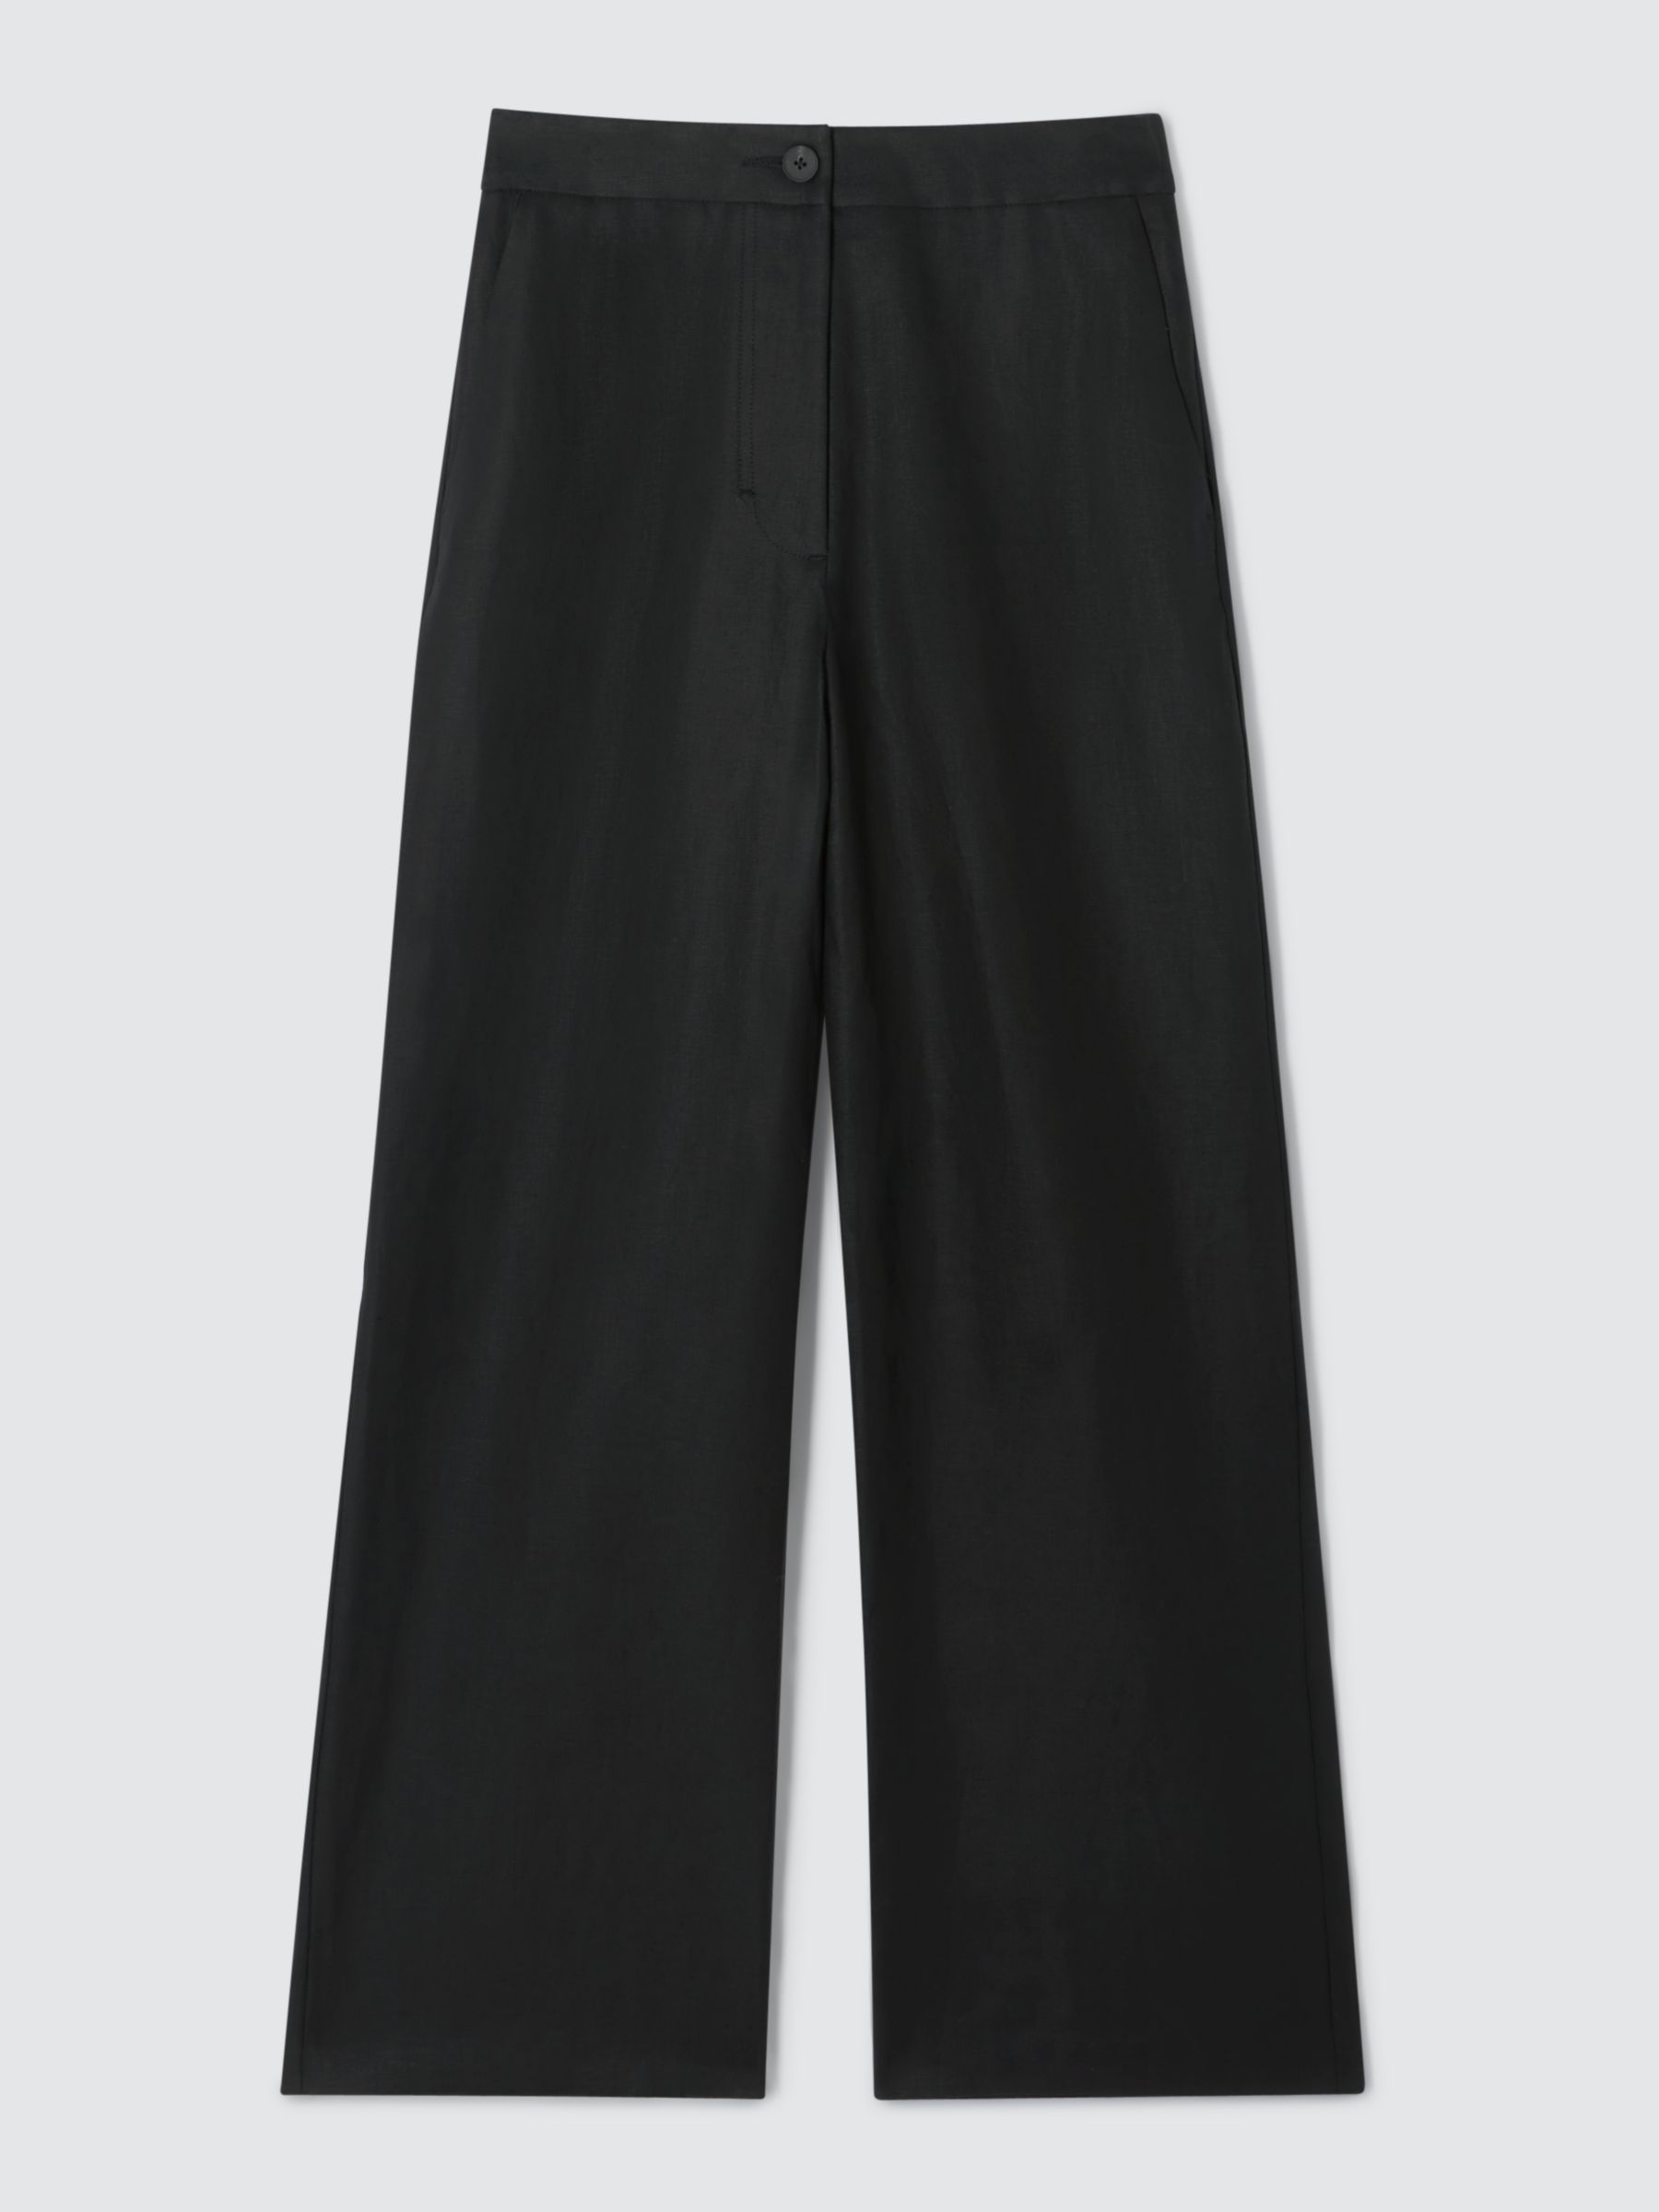 John Lewis Straight Fit Linen Trousers, Black, 8